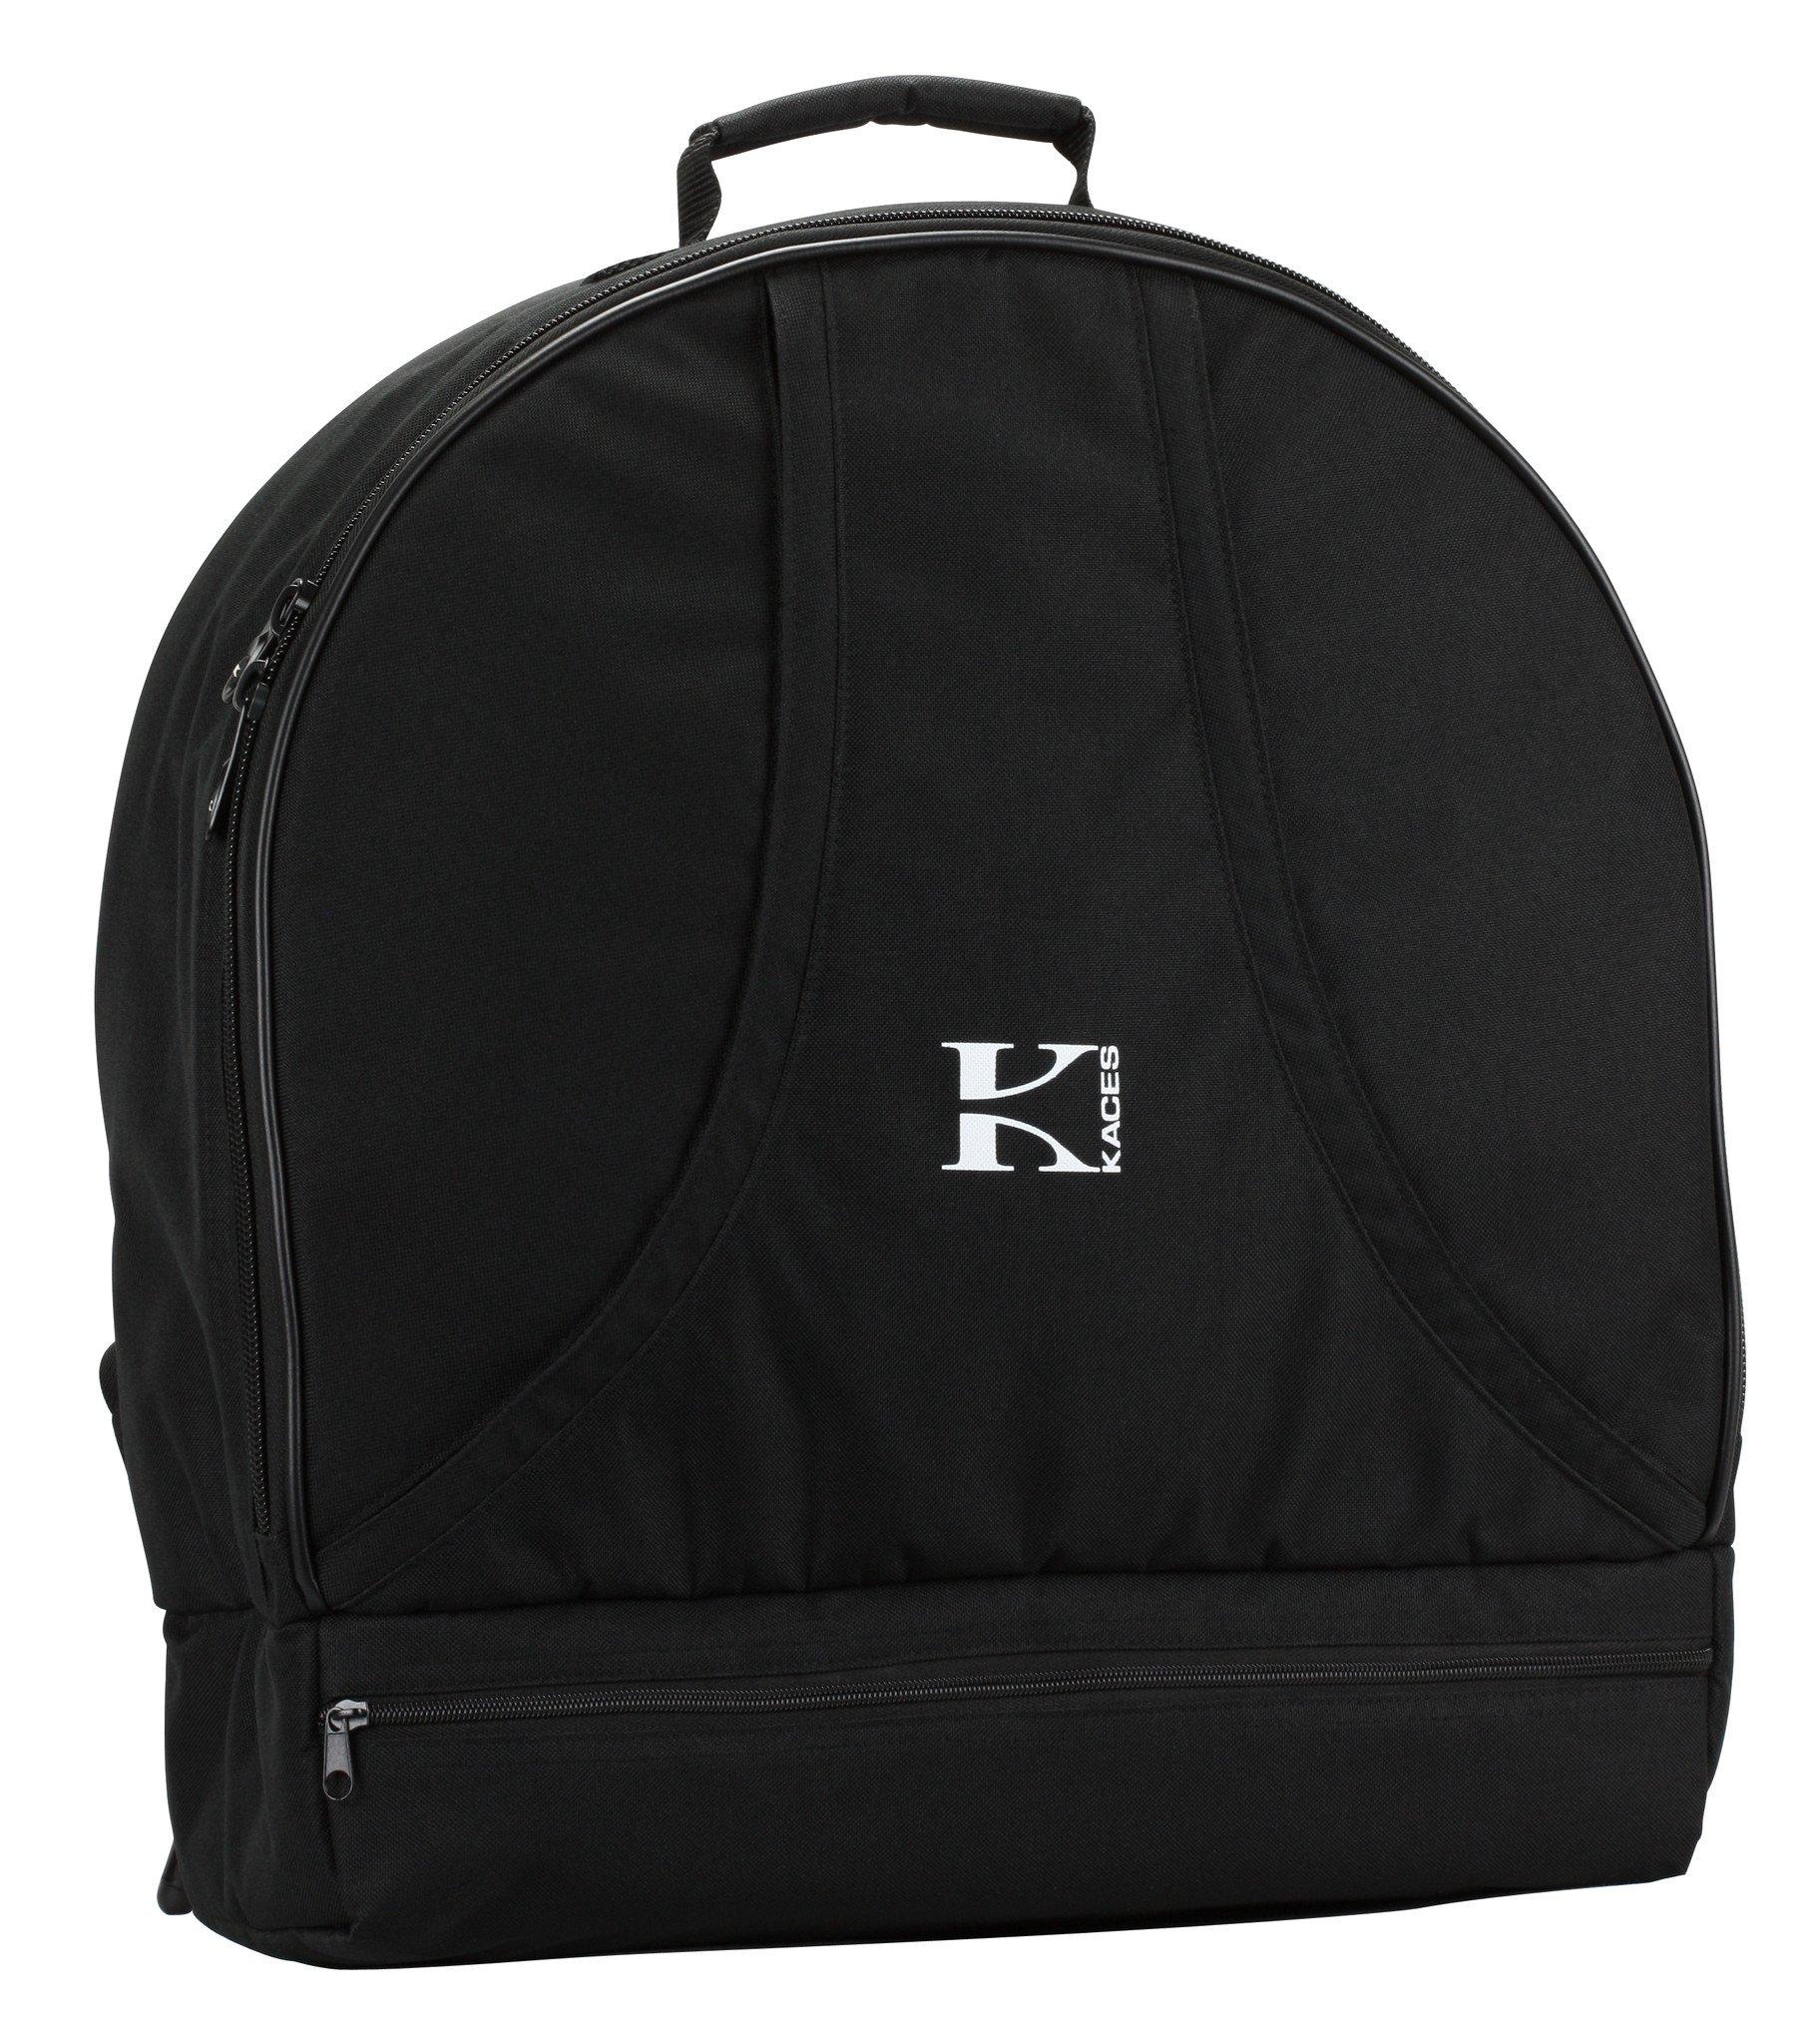 SNARE DRUM Kit backpack